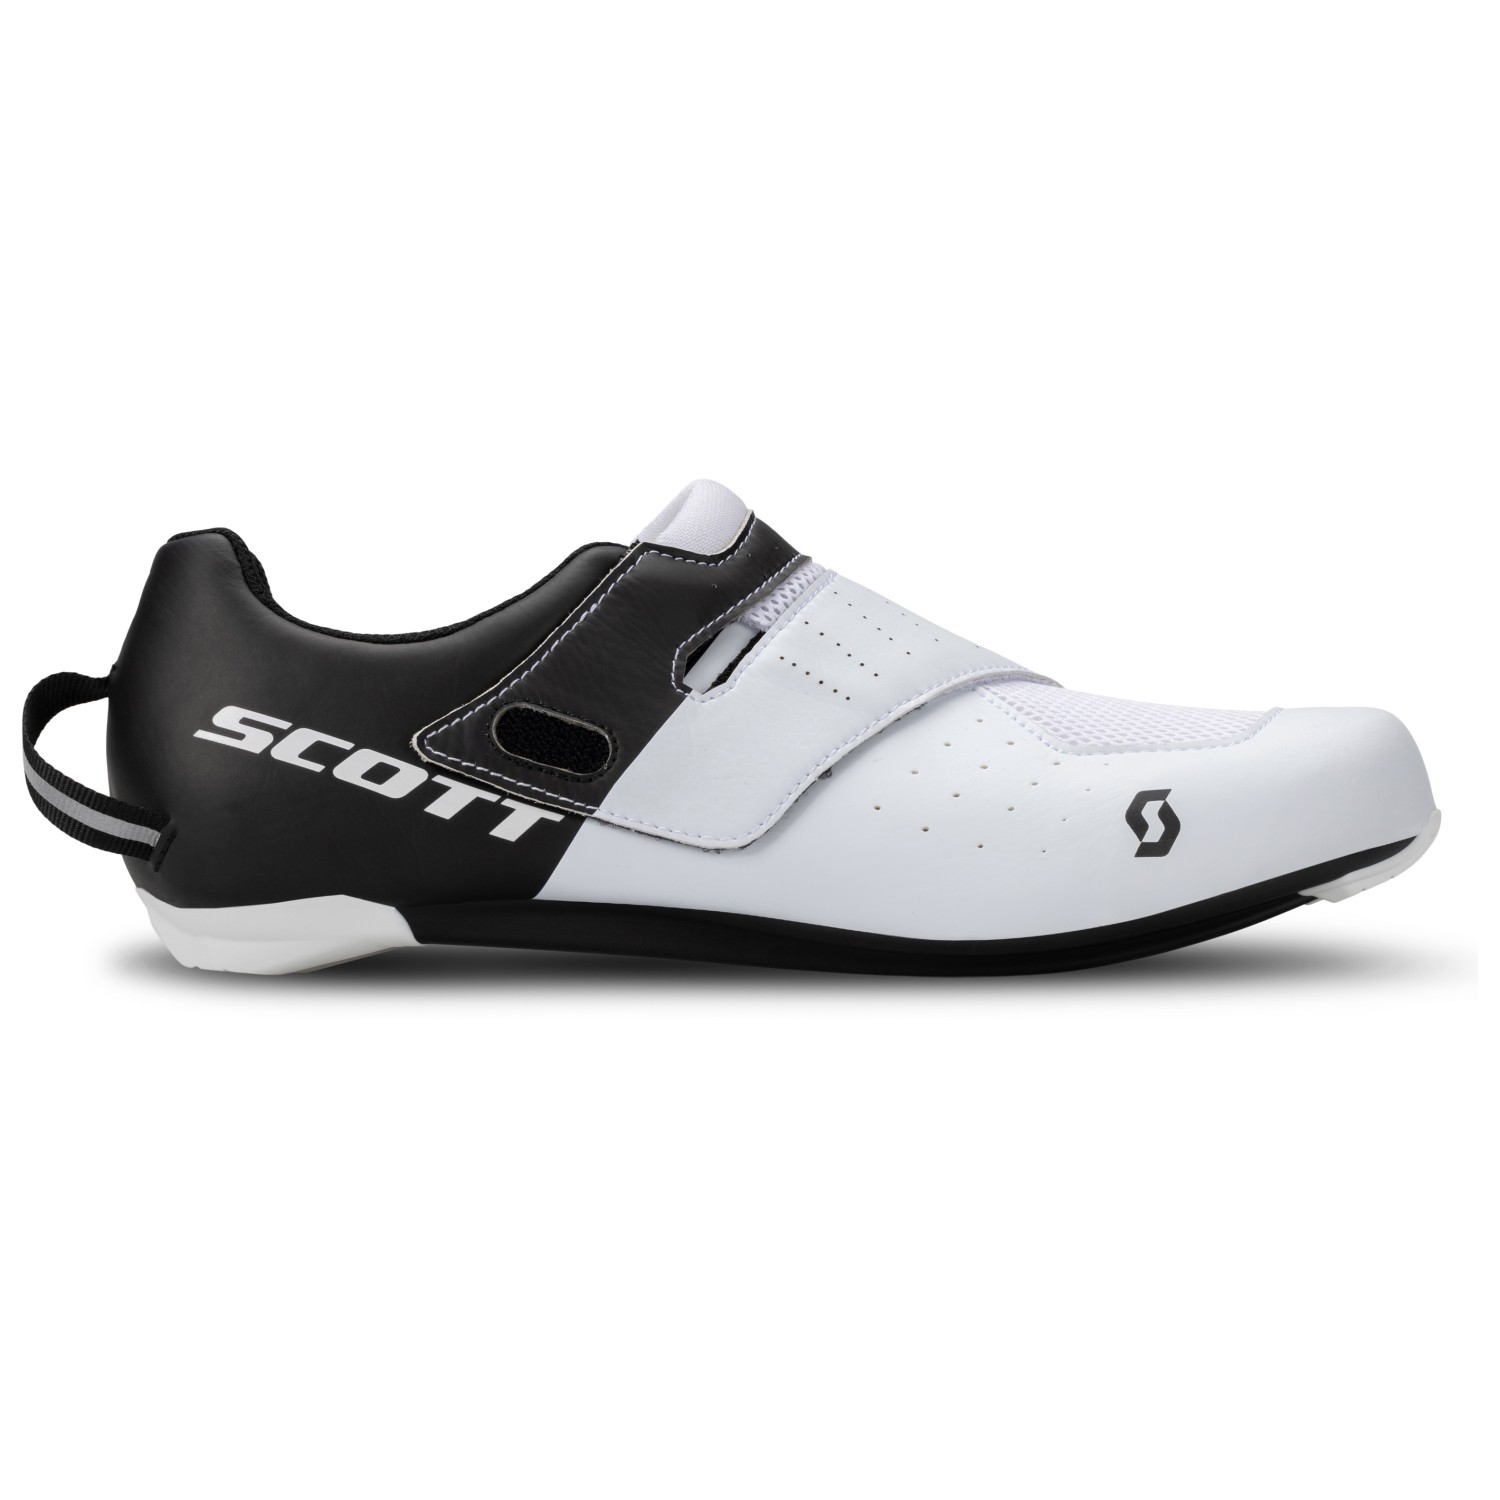 Велосипедная обувь Scott Road Tri Sprint, цвет Black/White